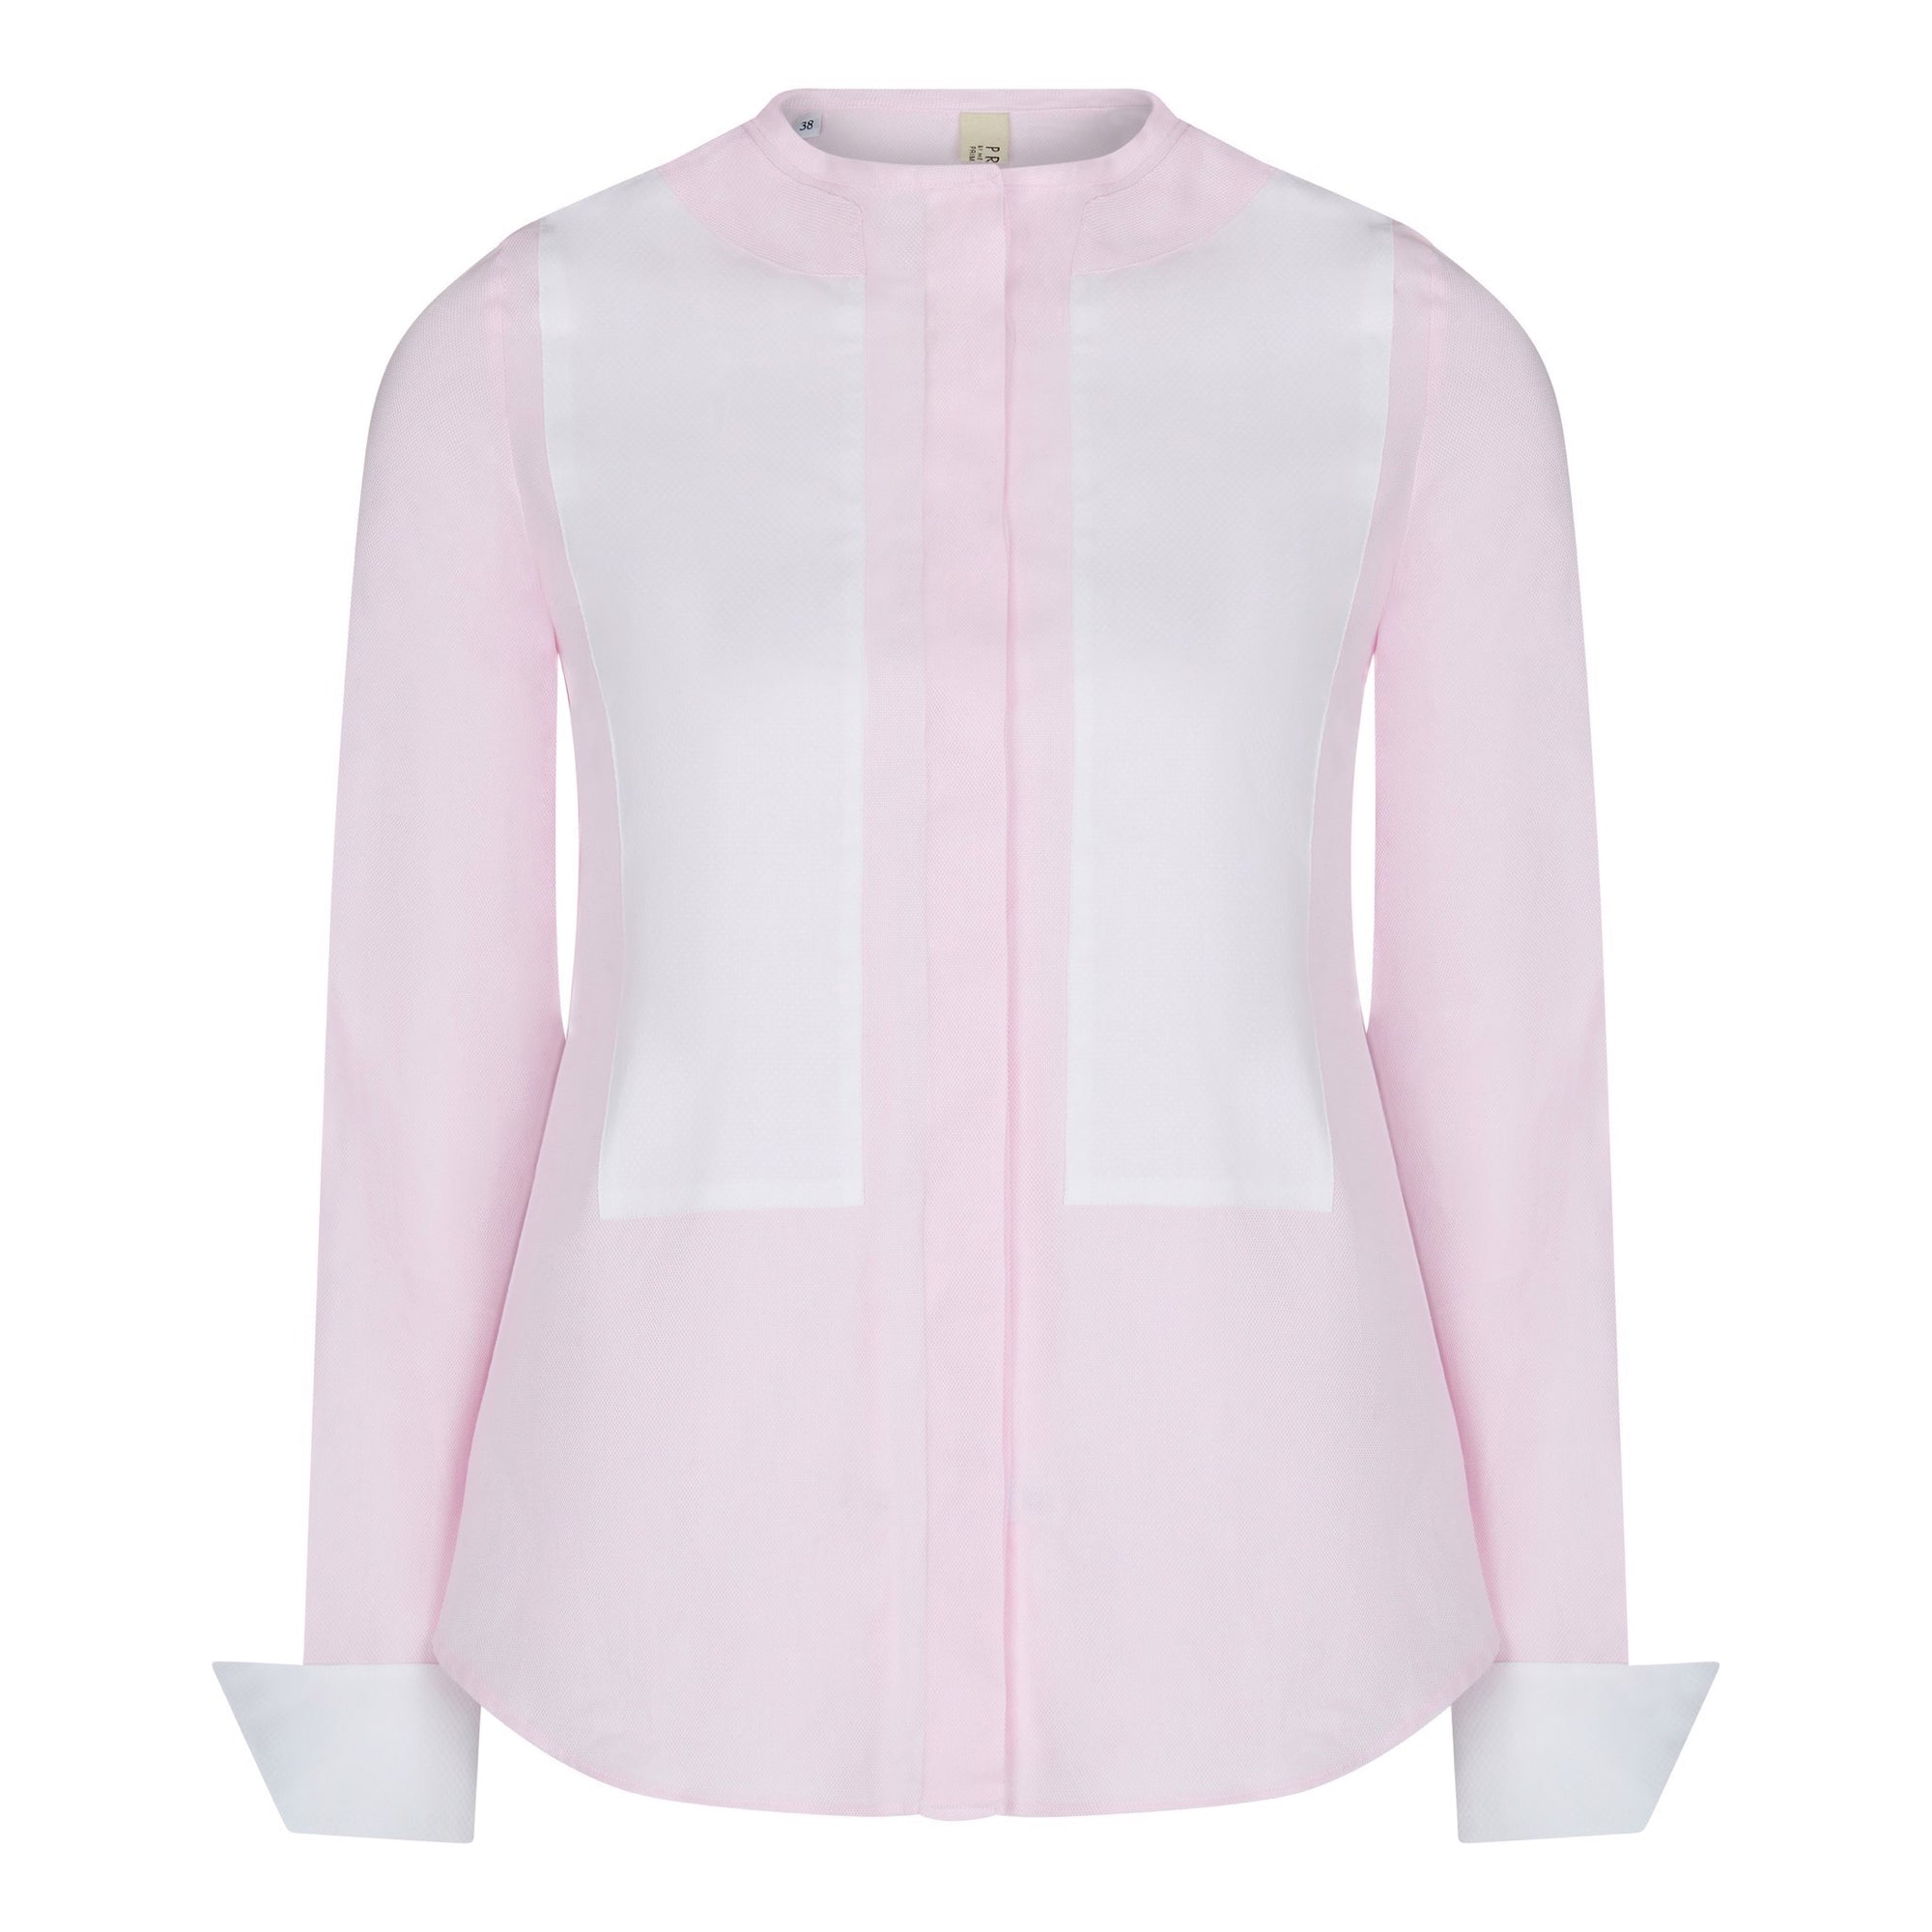 pink ponza shirt telegraph blouse #wfh